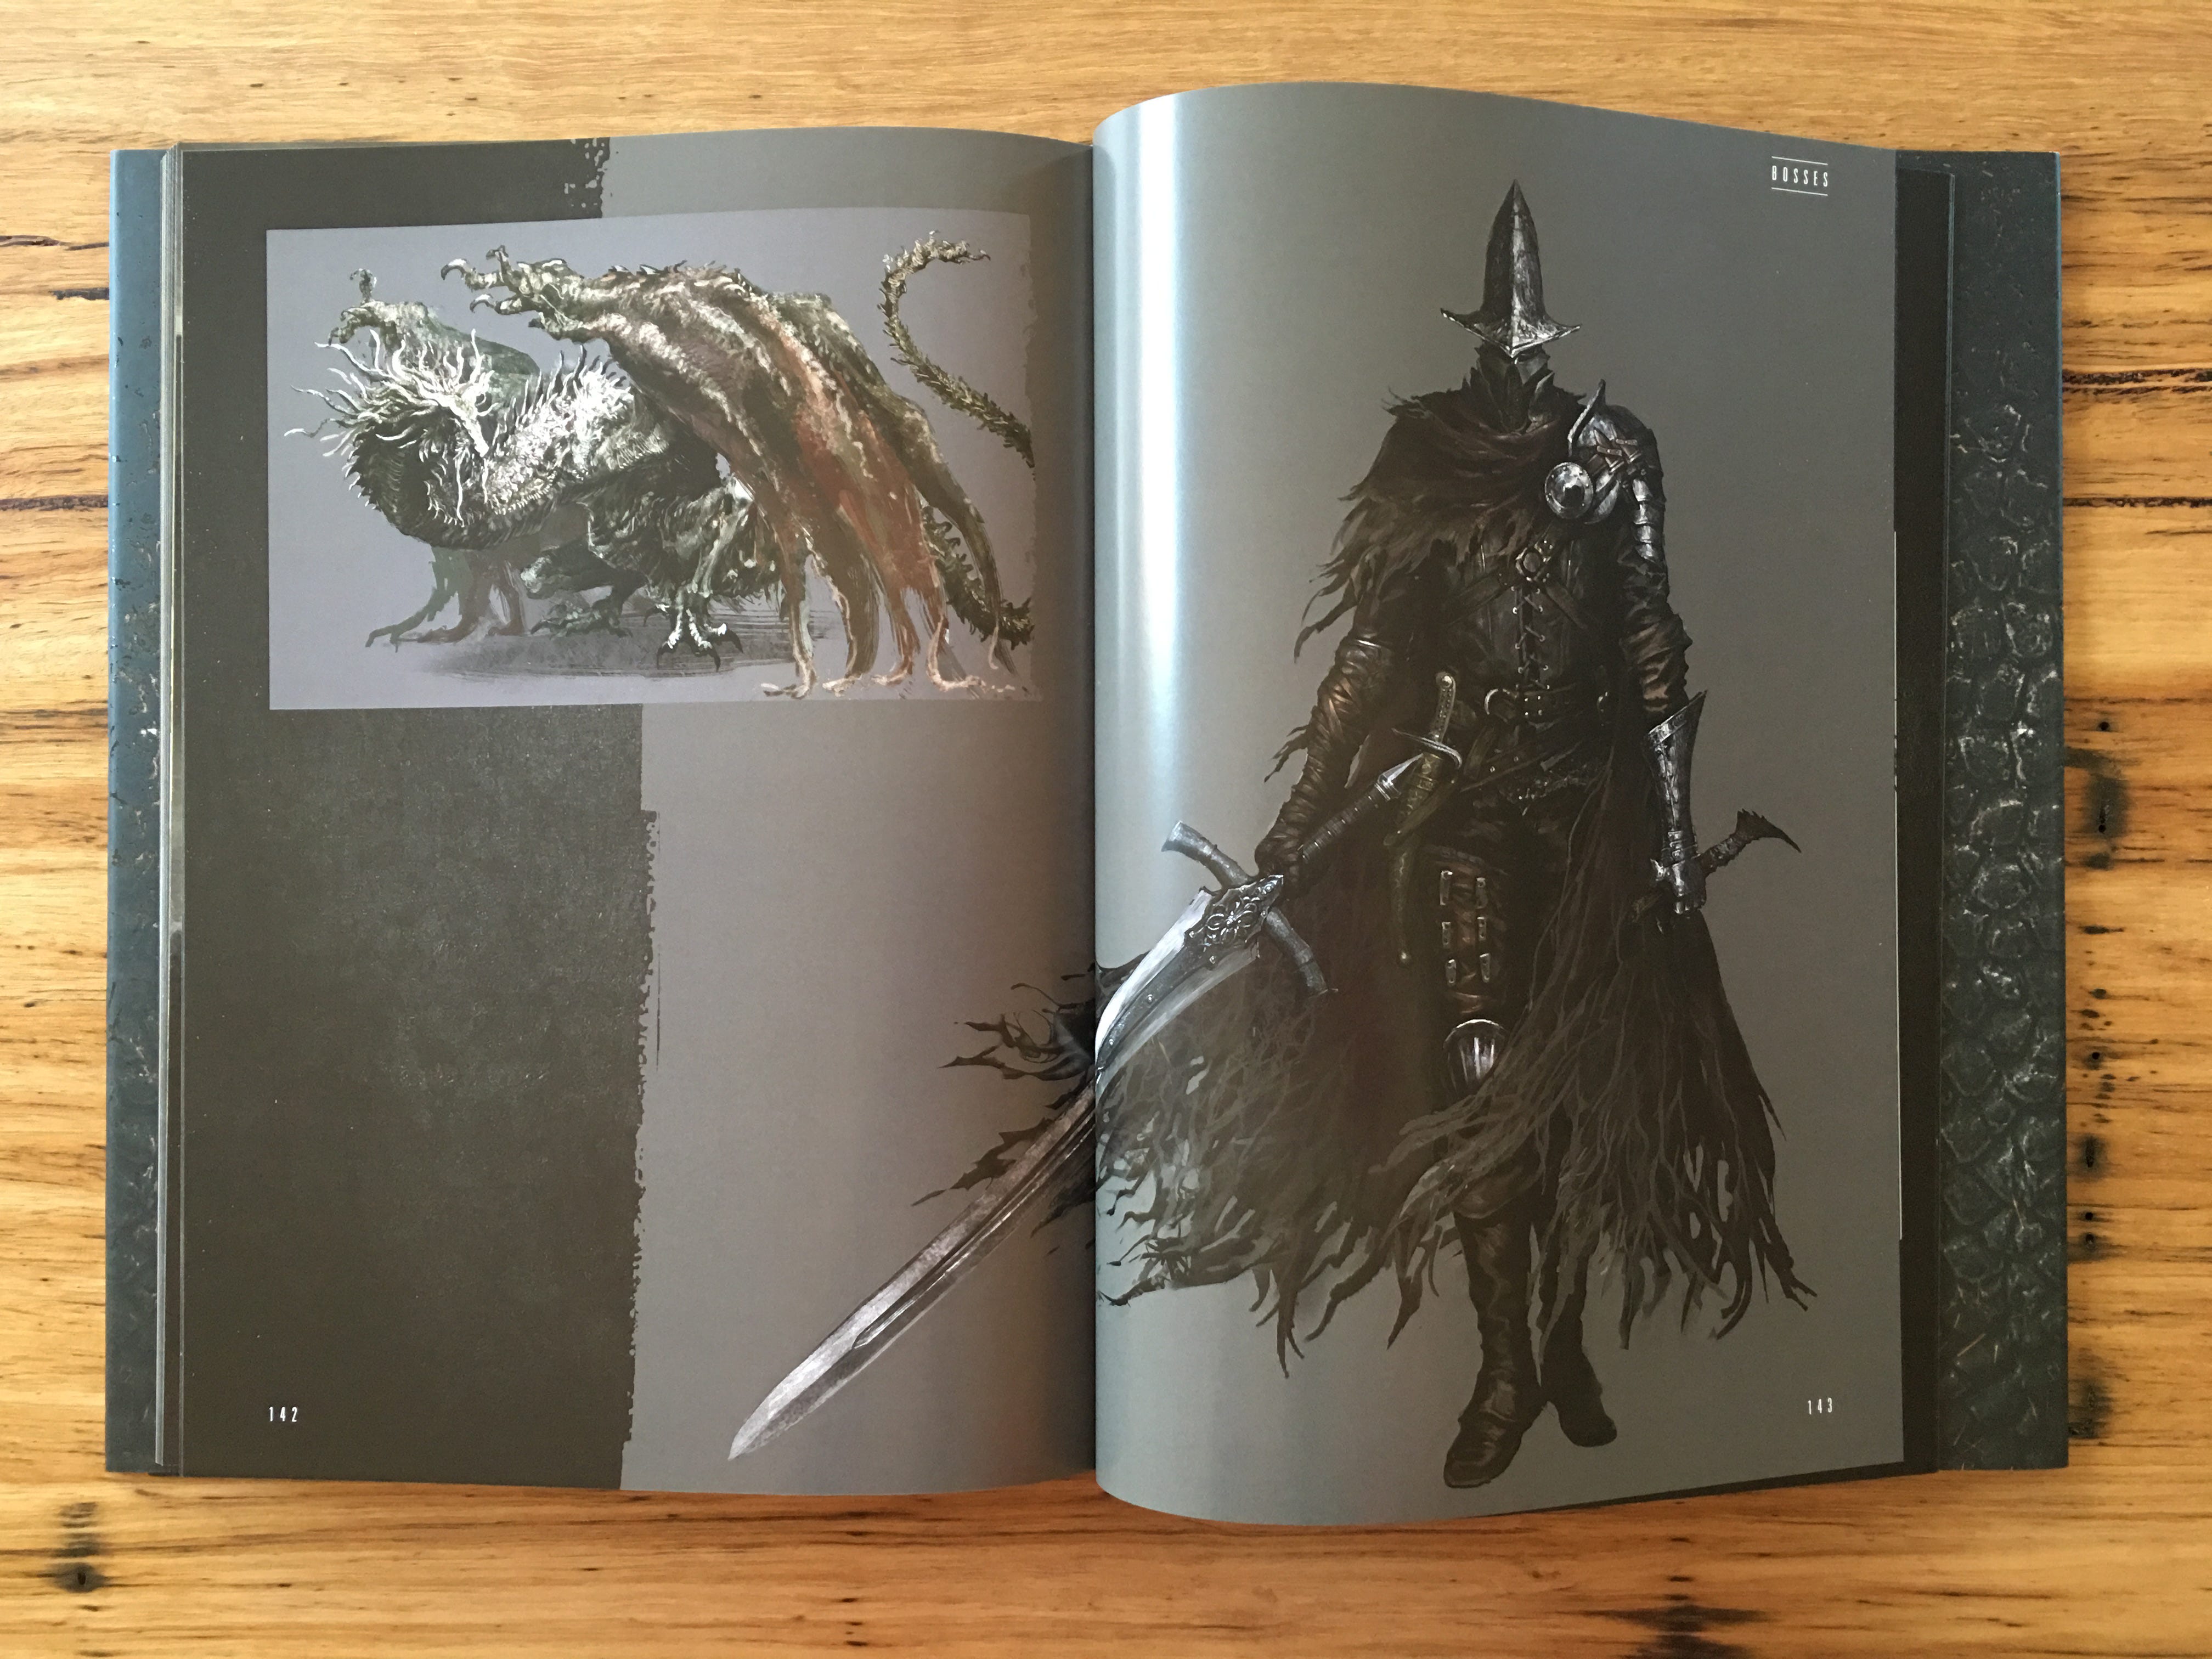 Dark Souls: Design Works (Hardcover)